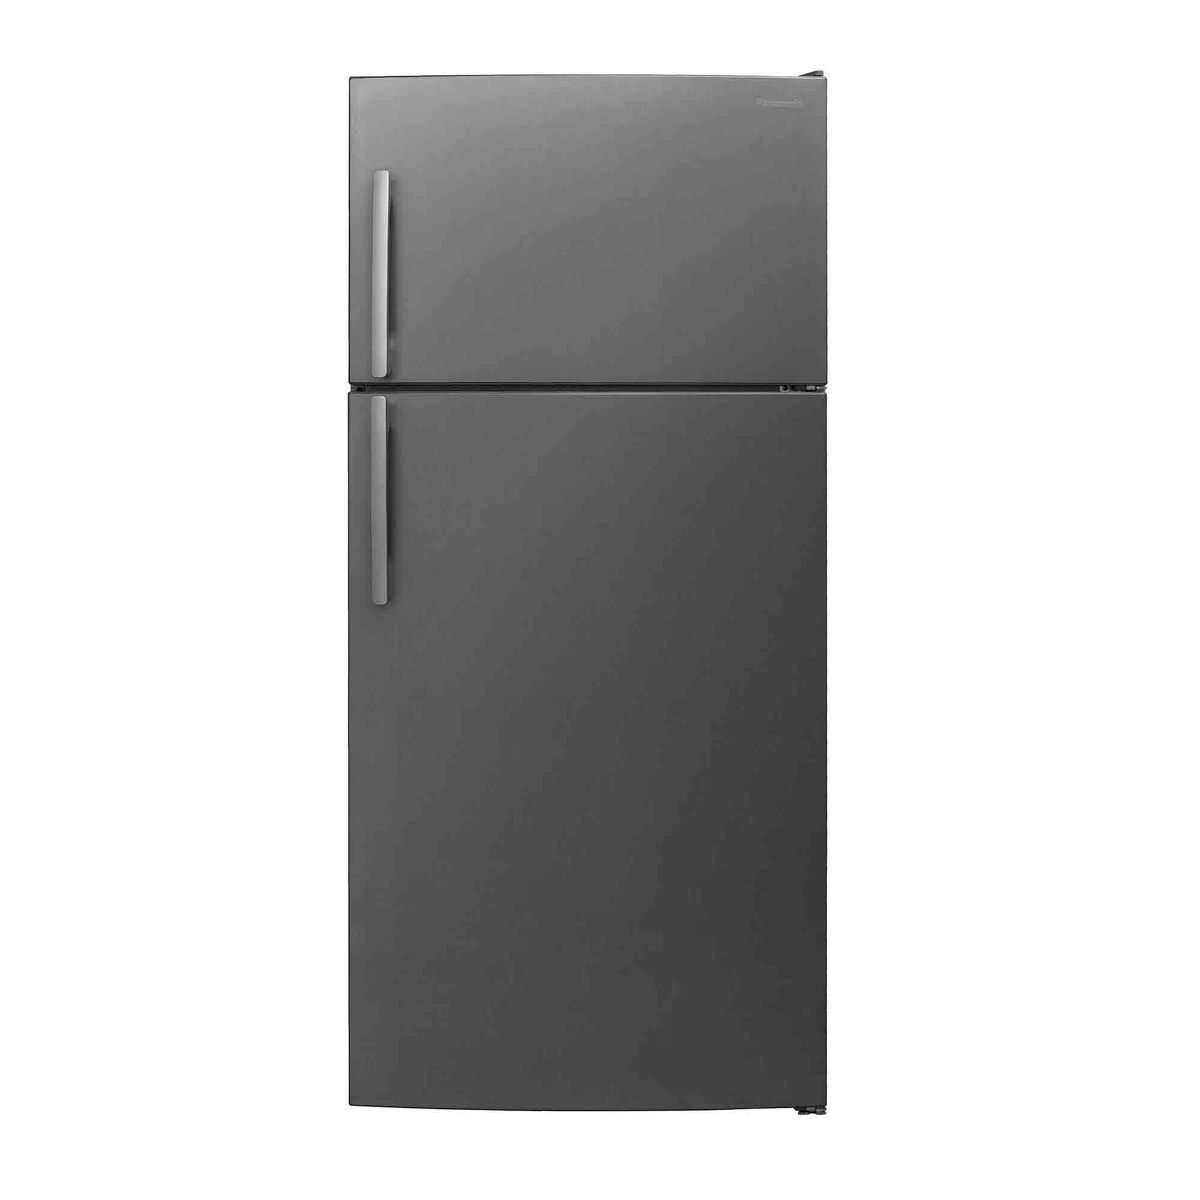 Panasonic Double Door Refrigerator, 750 L, Black Glass Finish, NRBC752VS